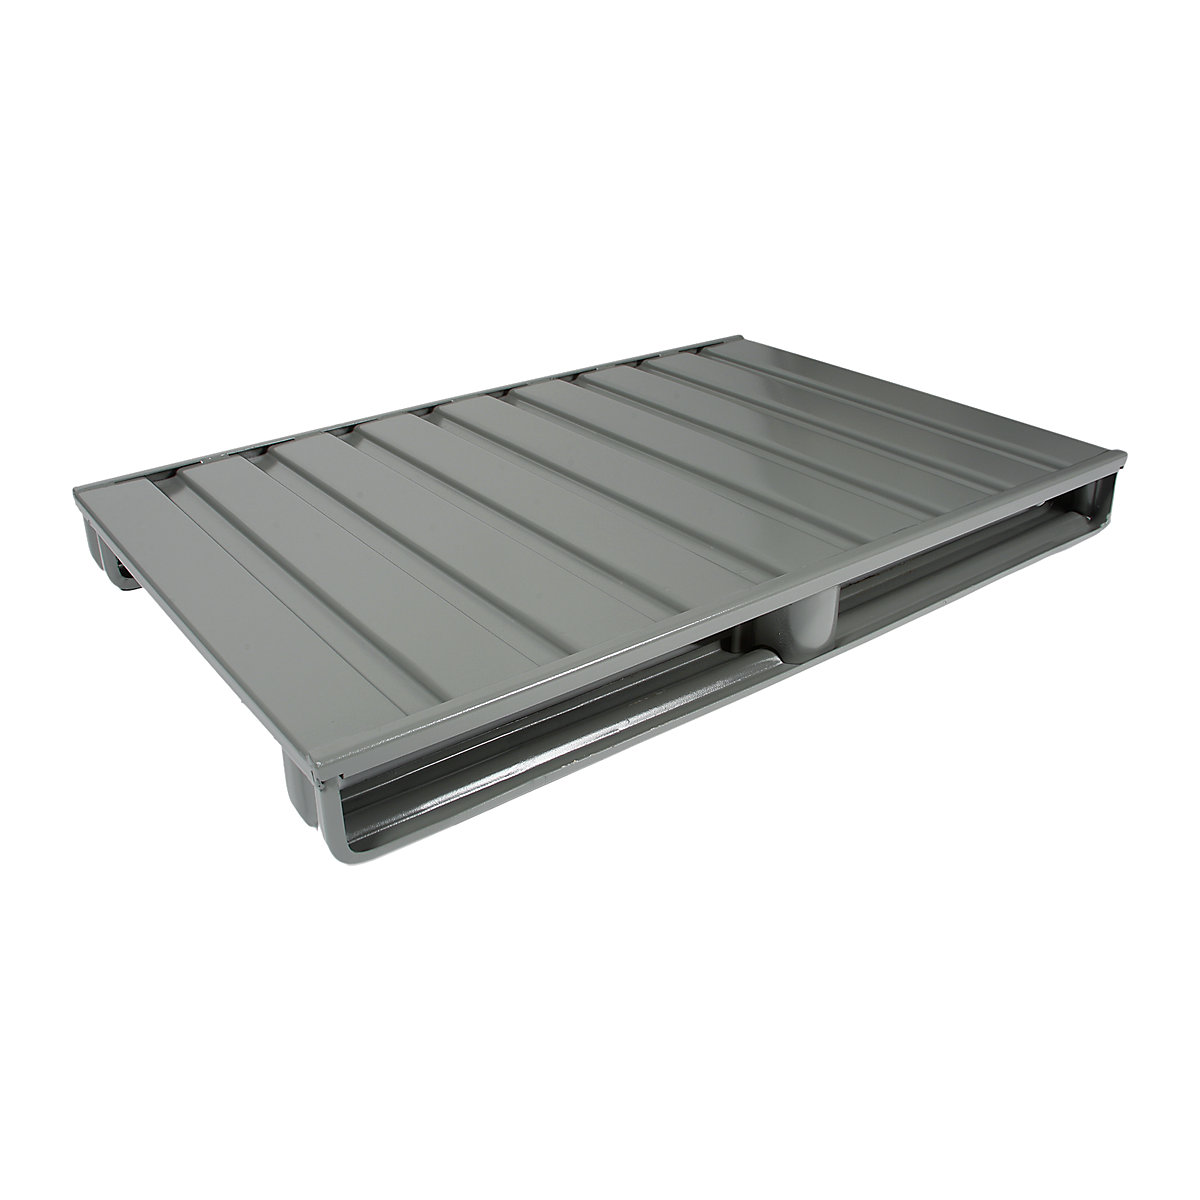 Flat steel pallet - Heson